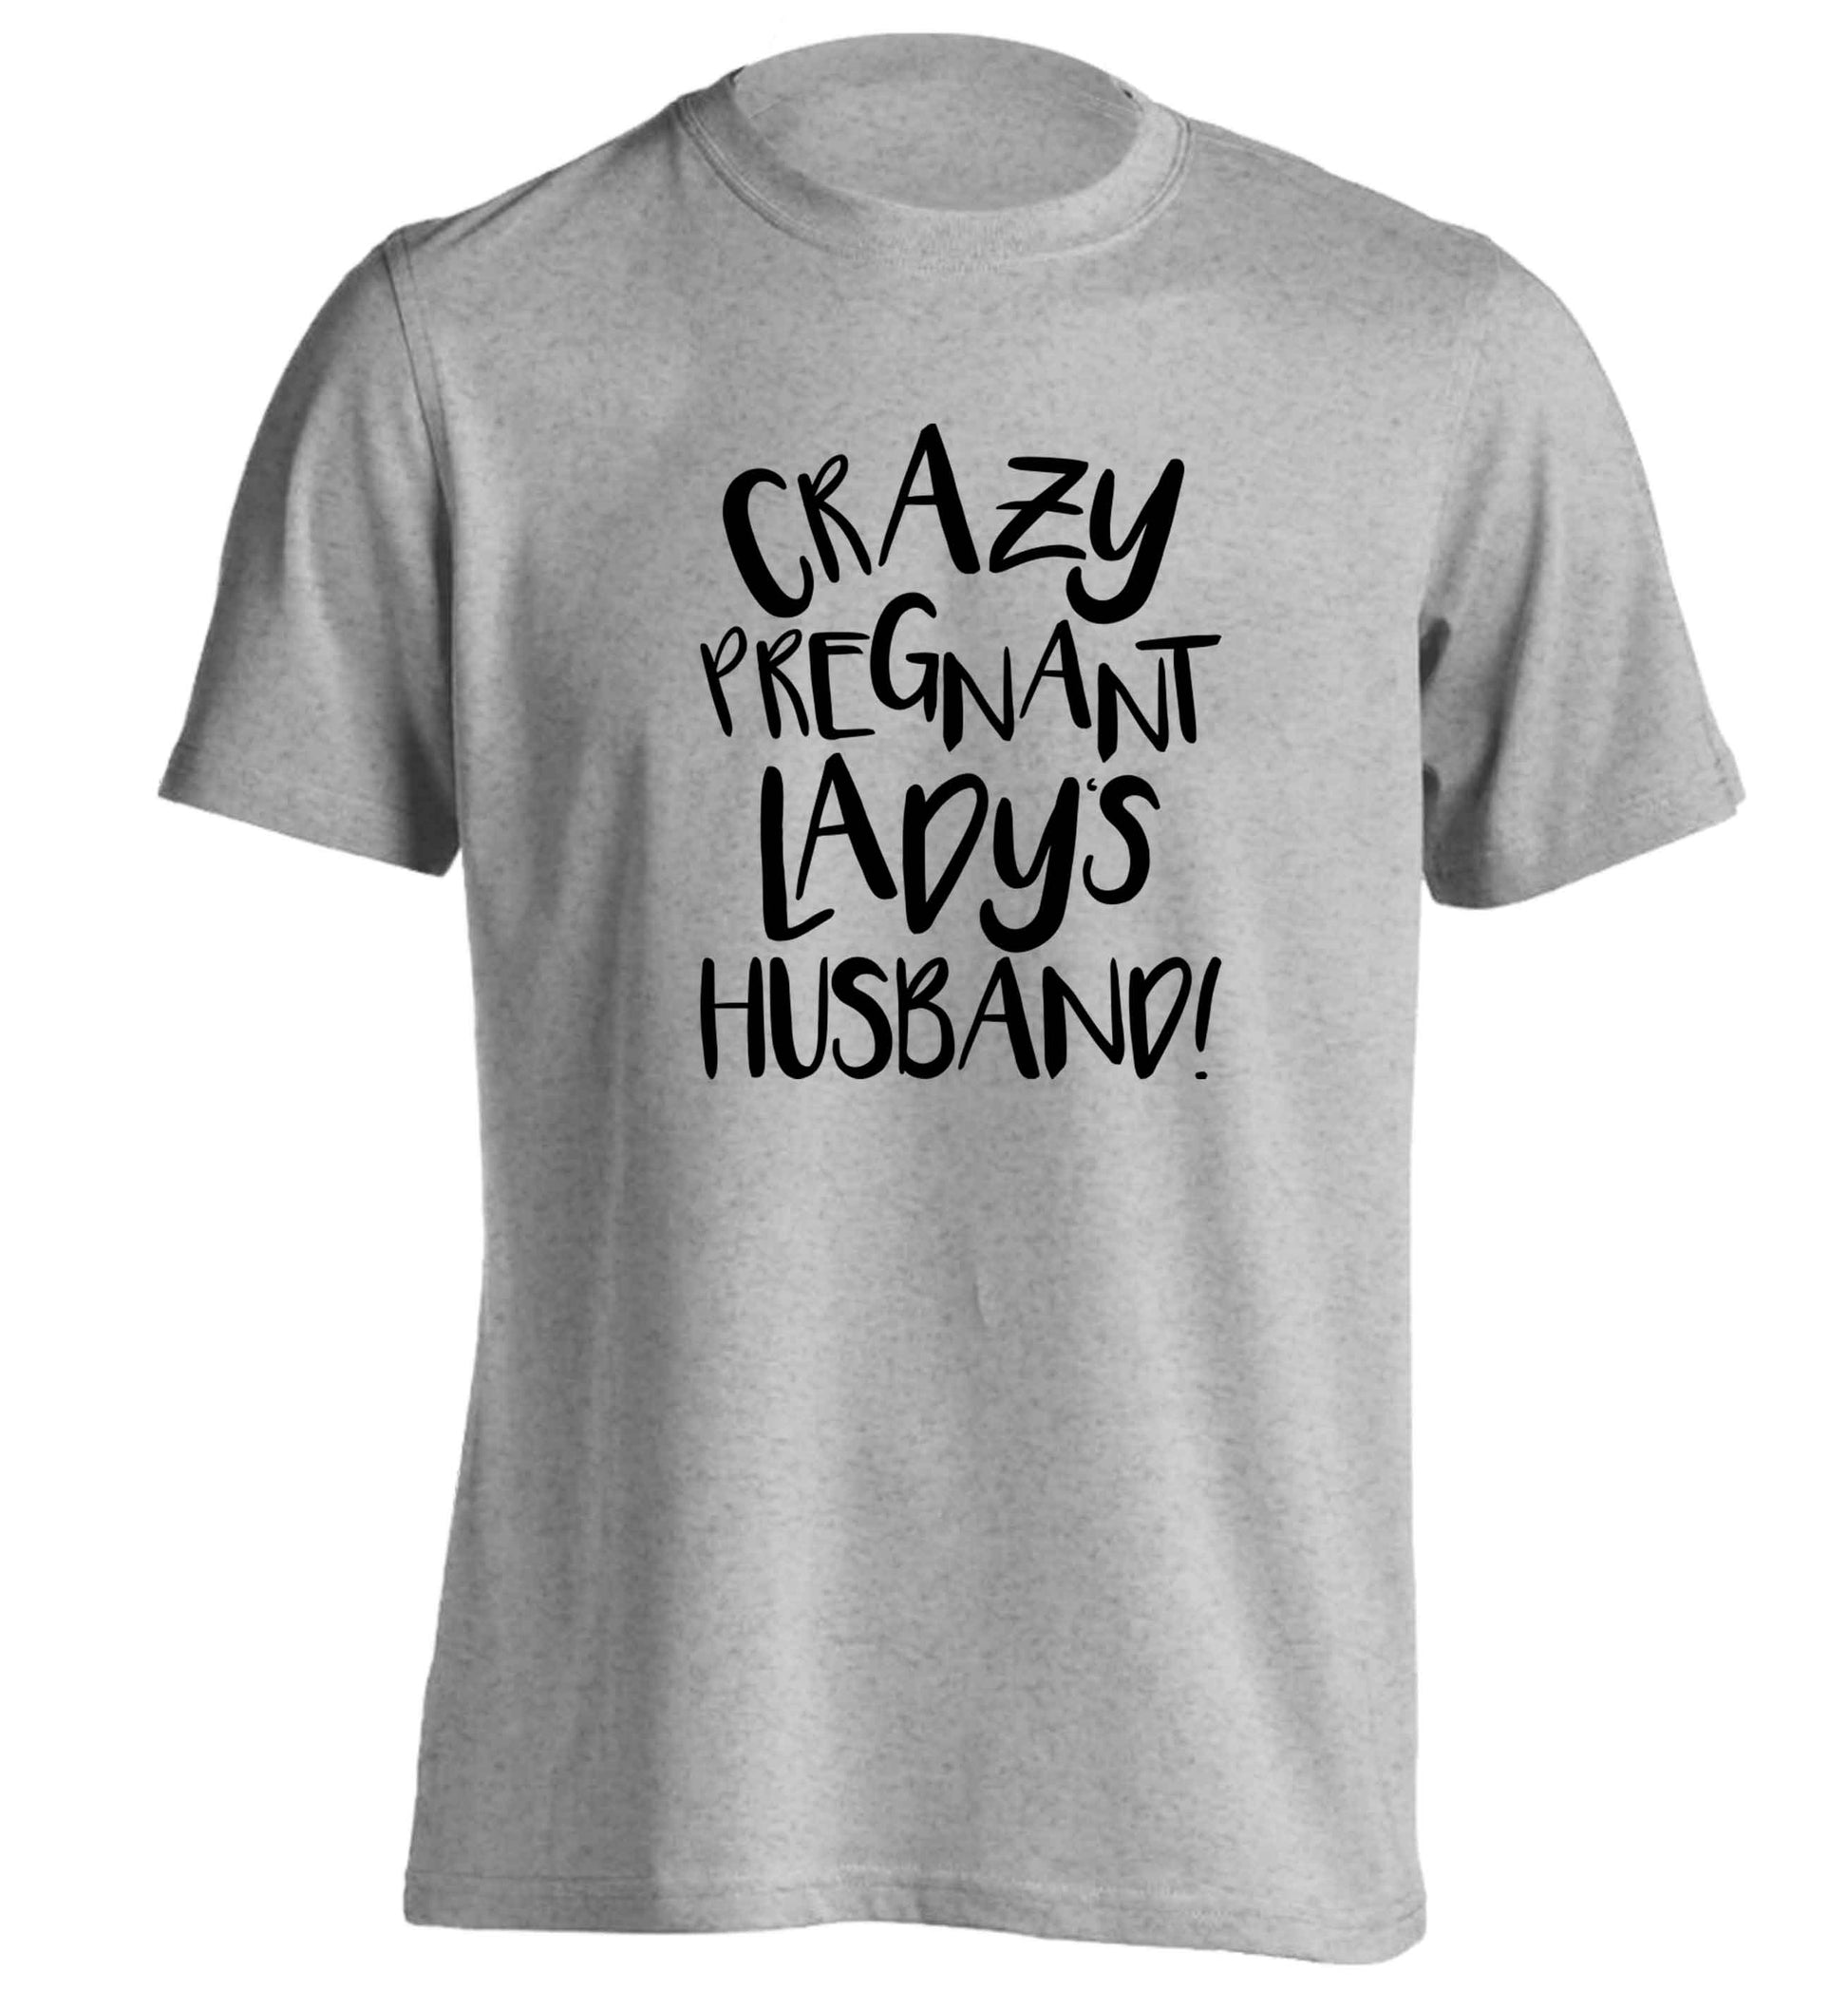 Crazy pregnant lady's husband adults unisex grey Tshirt 2XL